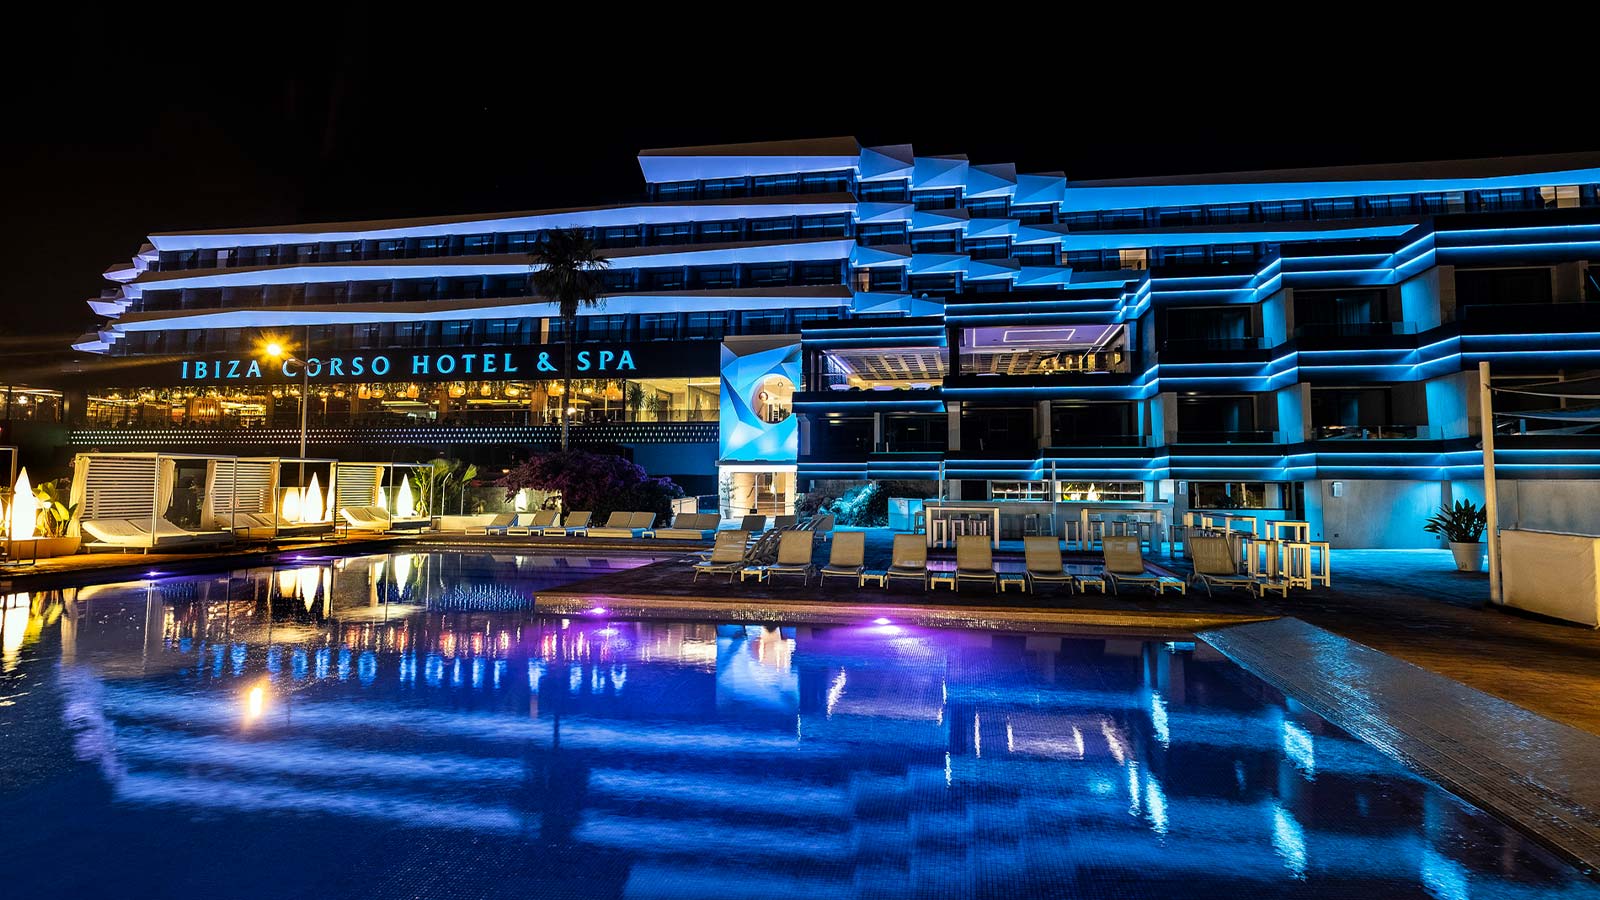 Ibiza Corso Hotel & Spa, un resort a la vanguardia del diseño